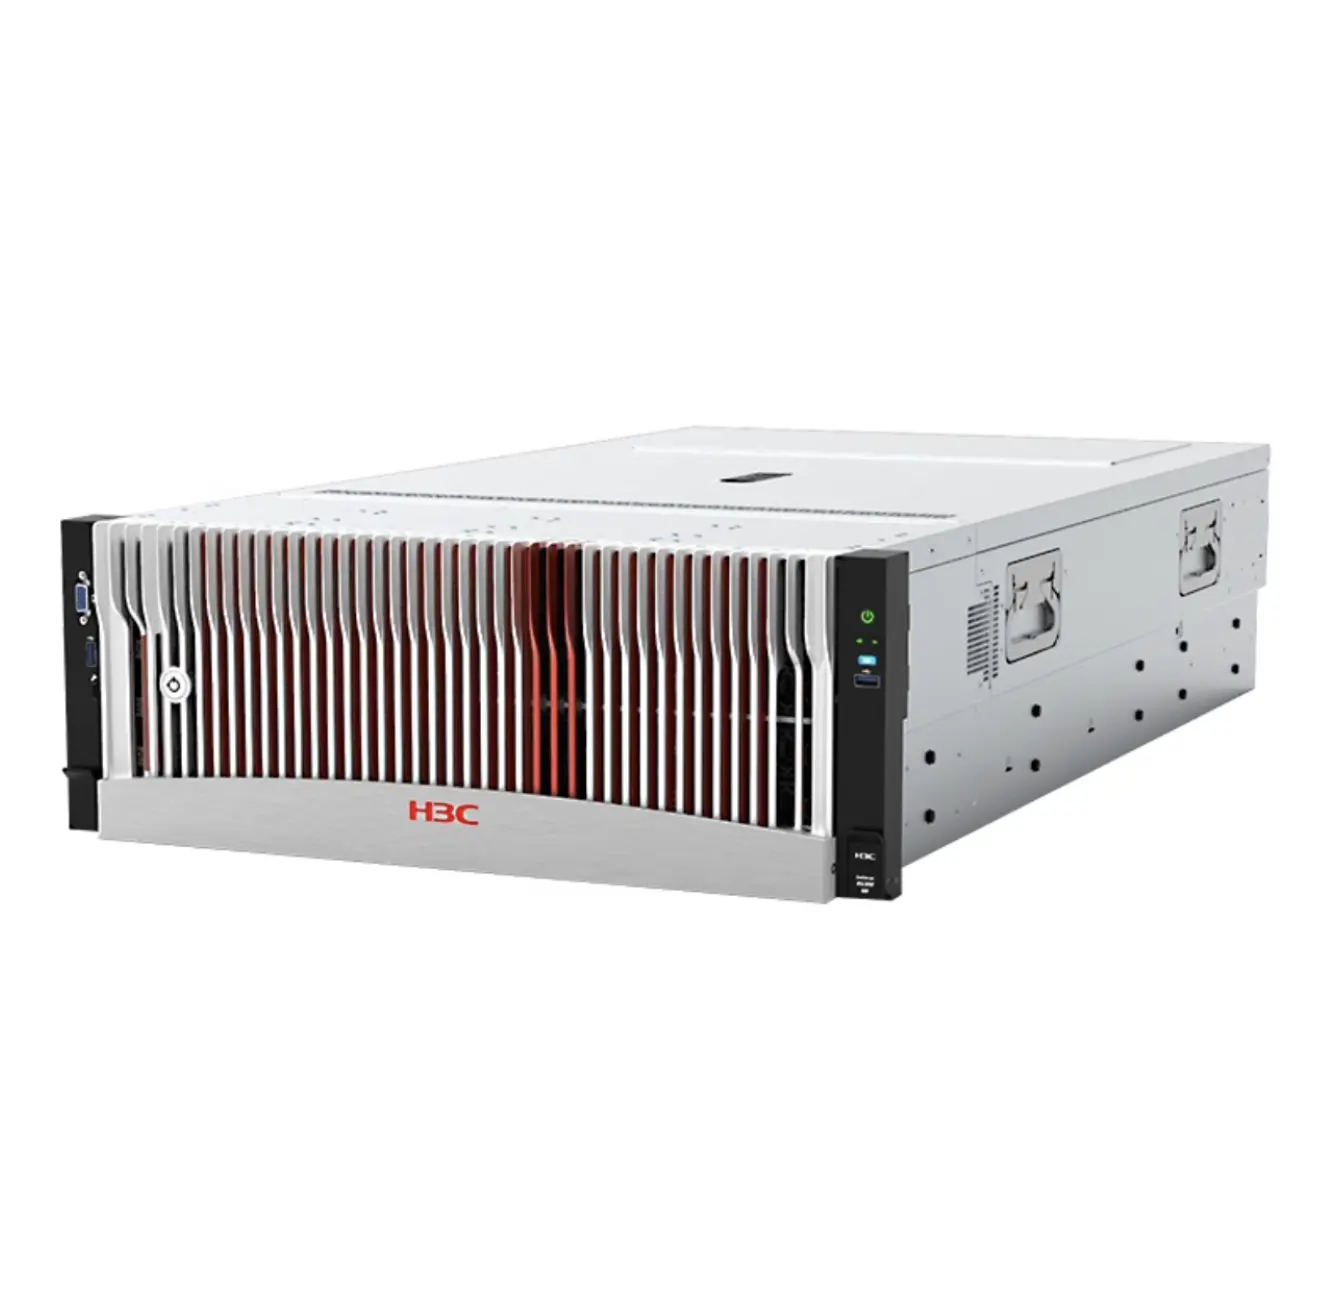 Último servidor H3C UniServer R5300 G5 4U servidor en rack servidor GPU R5300G5 servidor WINDOW 2009